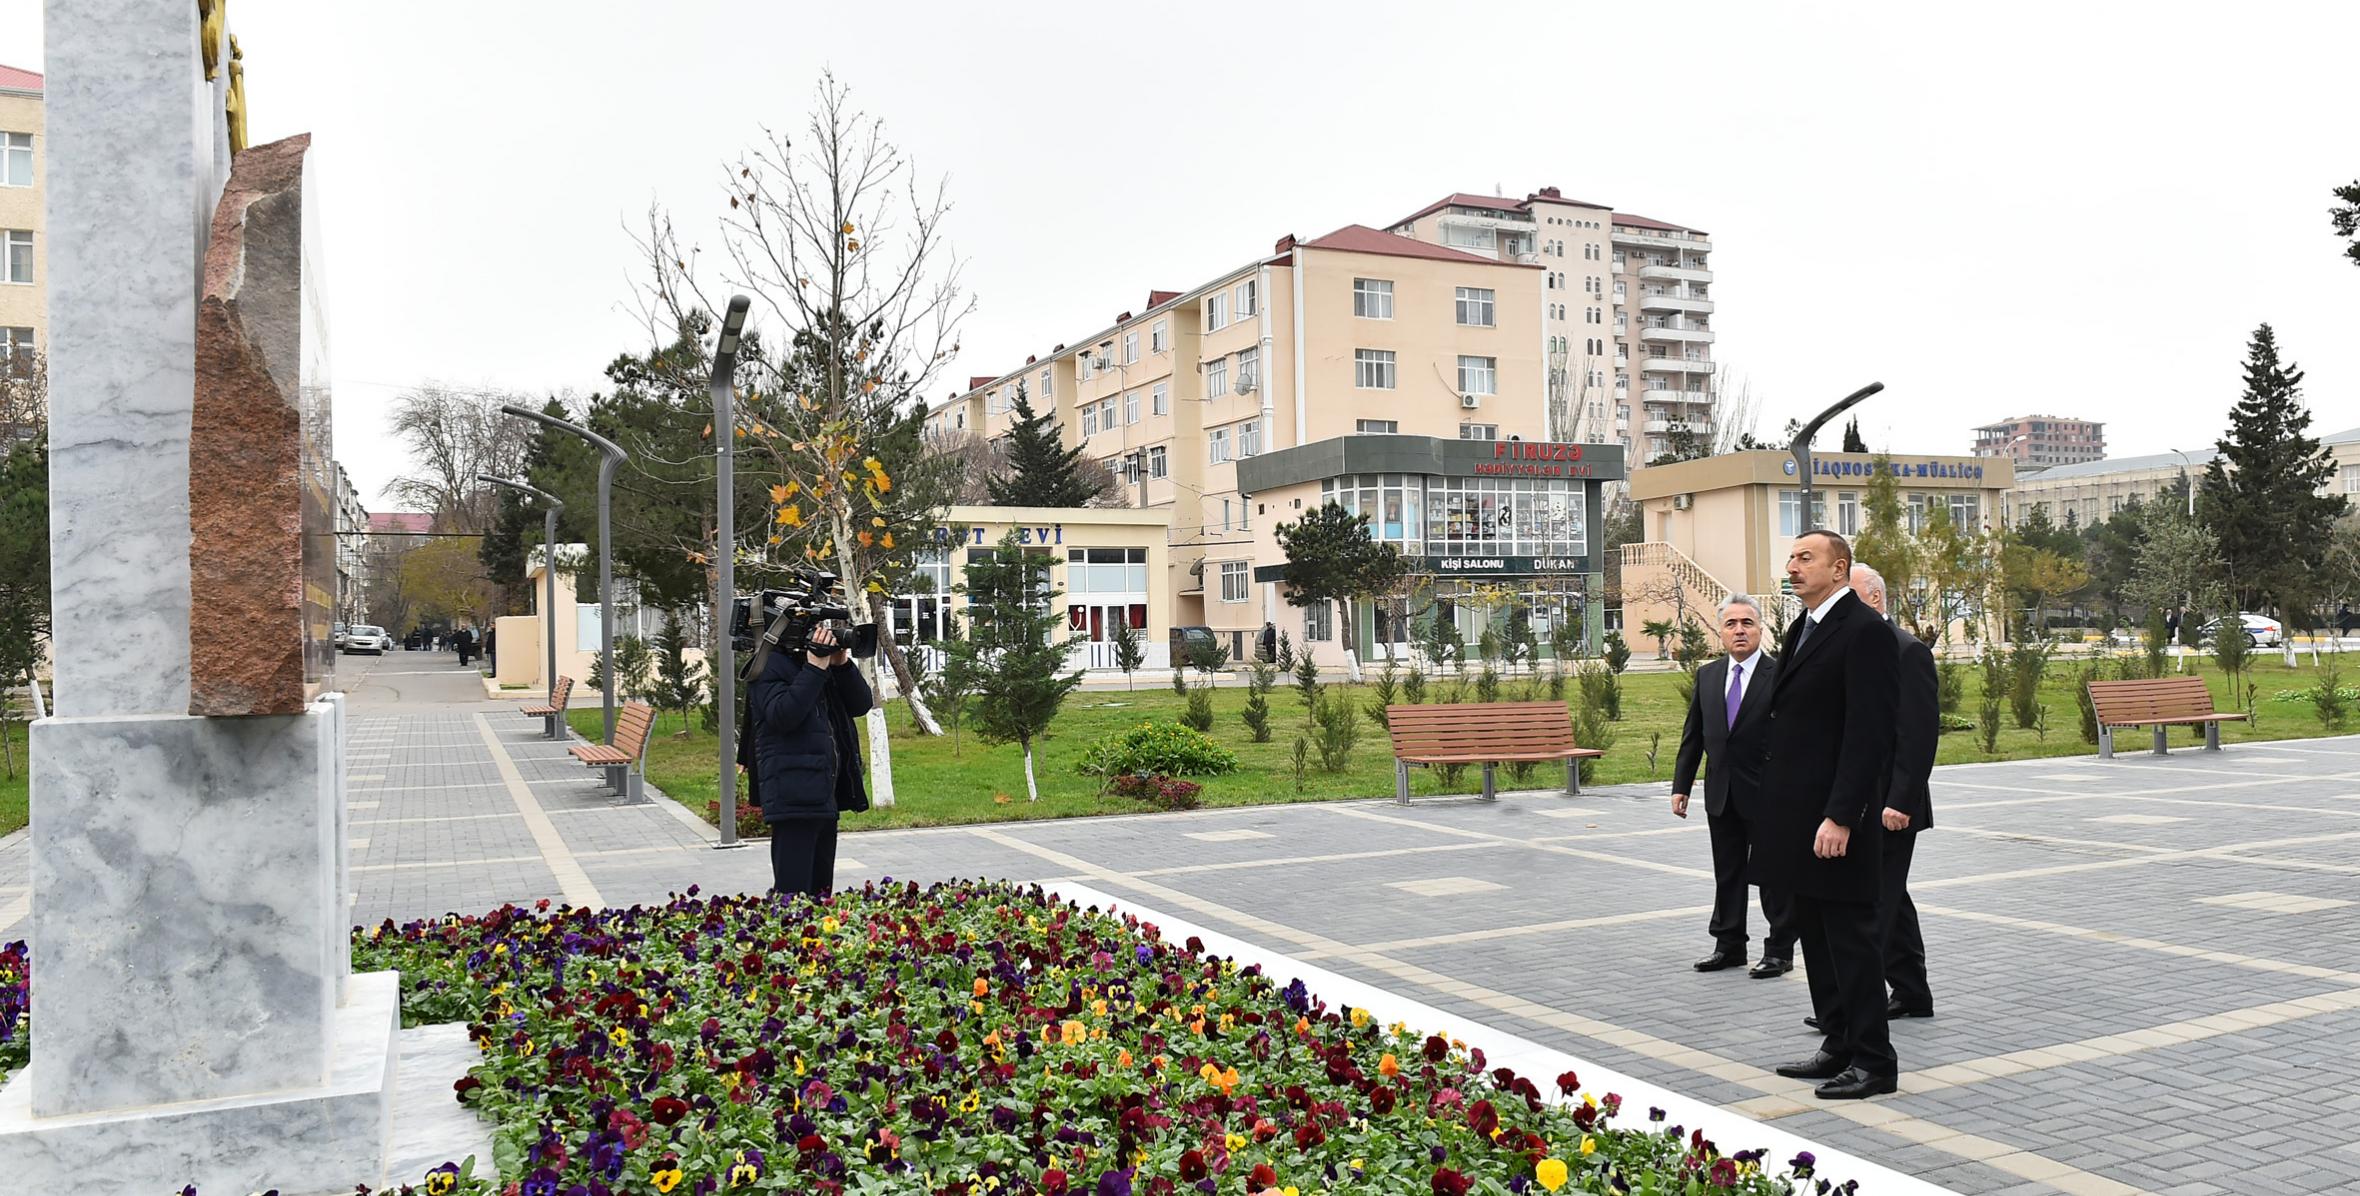 Ilham Aliyev viewed Ludwigshafen Park in Sumgayit after major overhaul